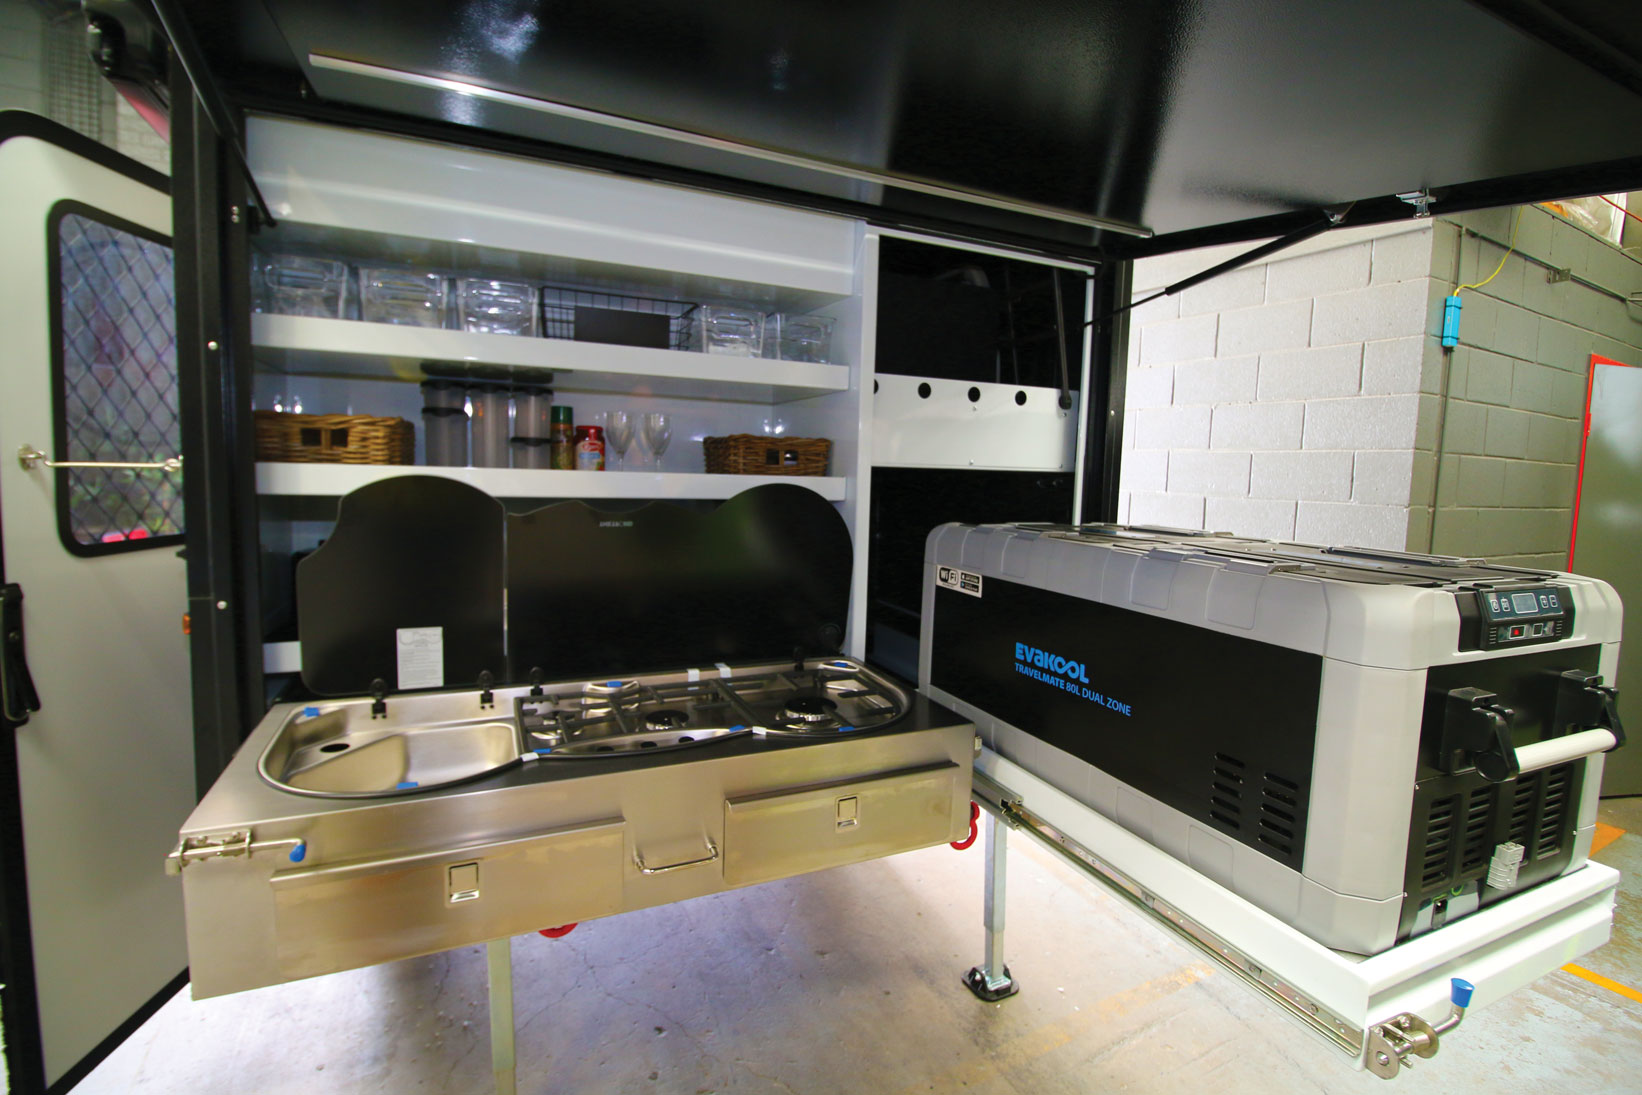 Modcon RV C2 kitchen open with fridge and stove